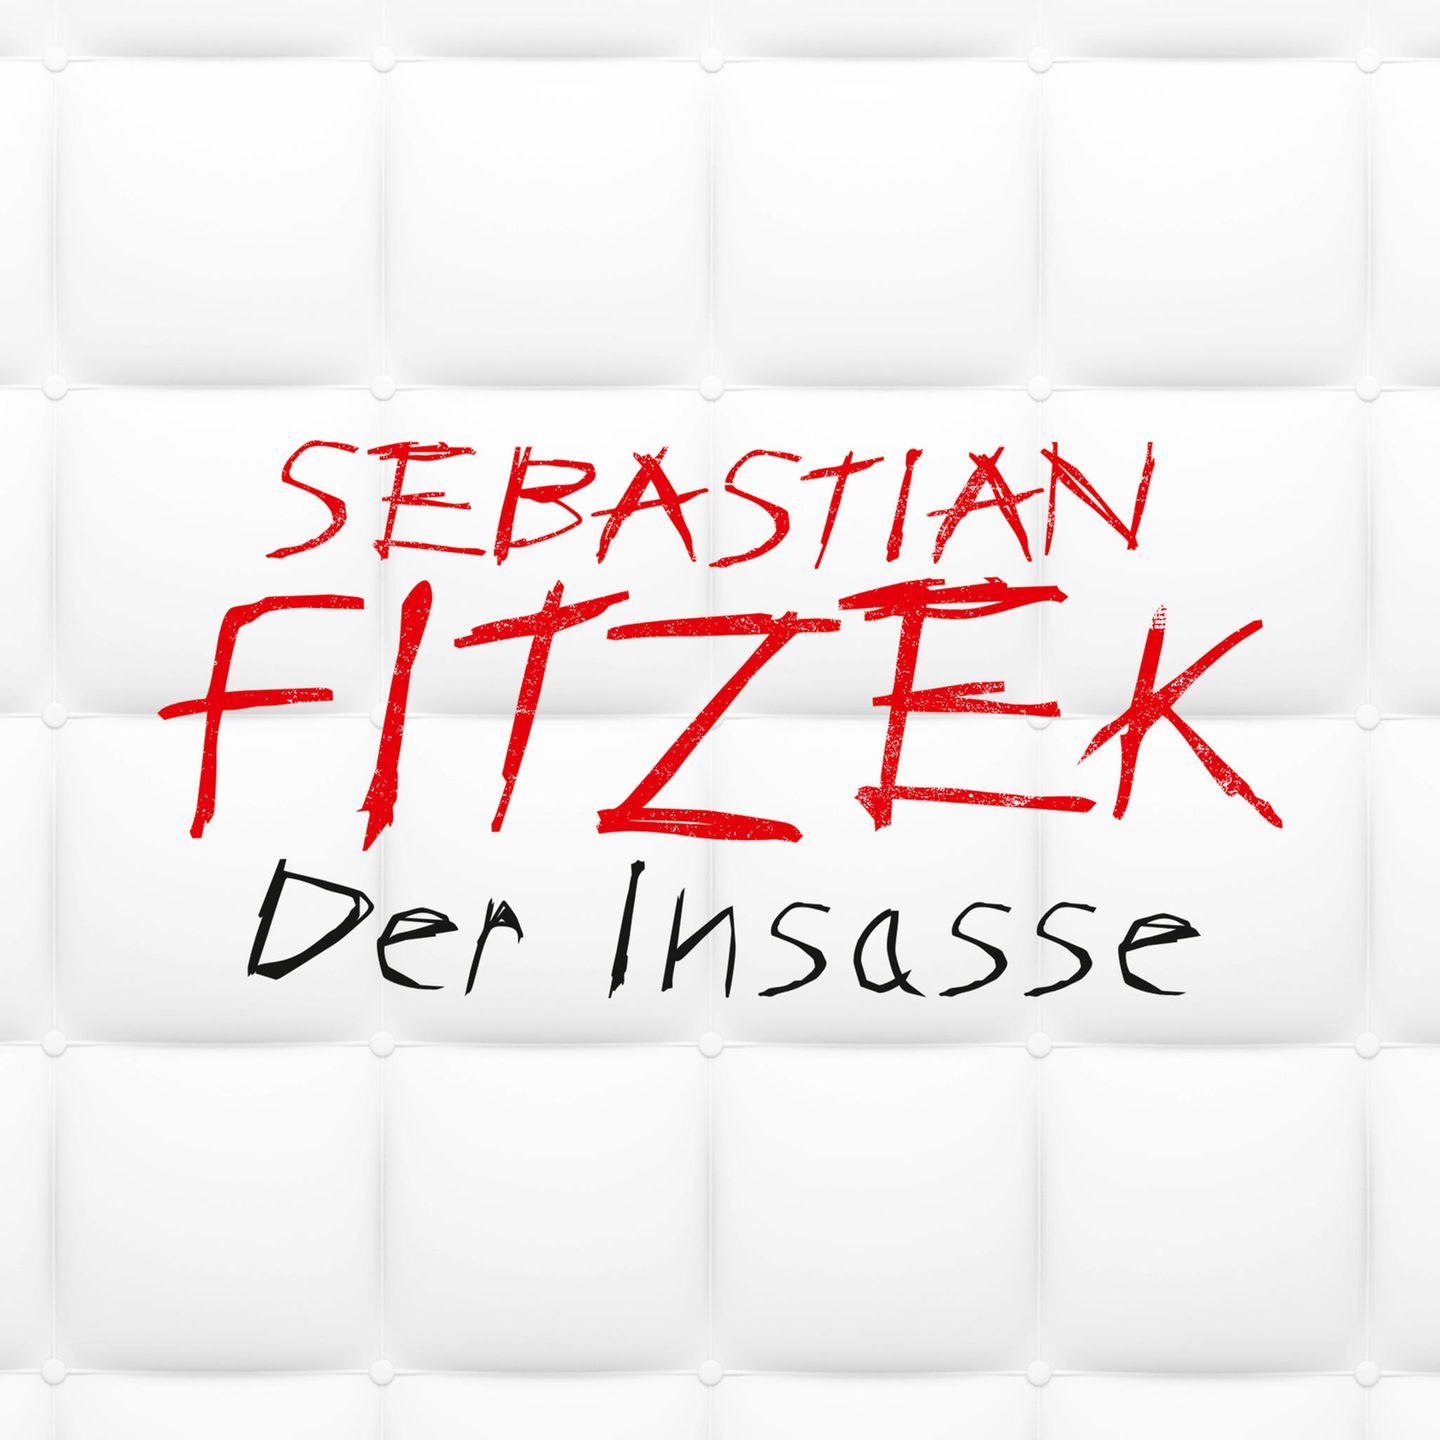 Sebastian Fitzek - Der Insasse